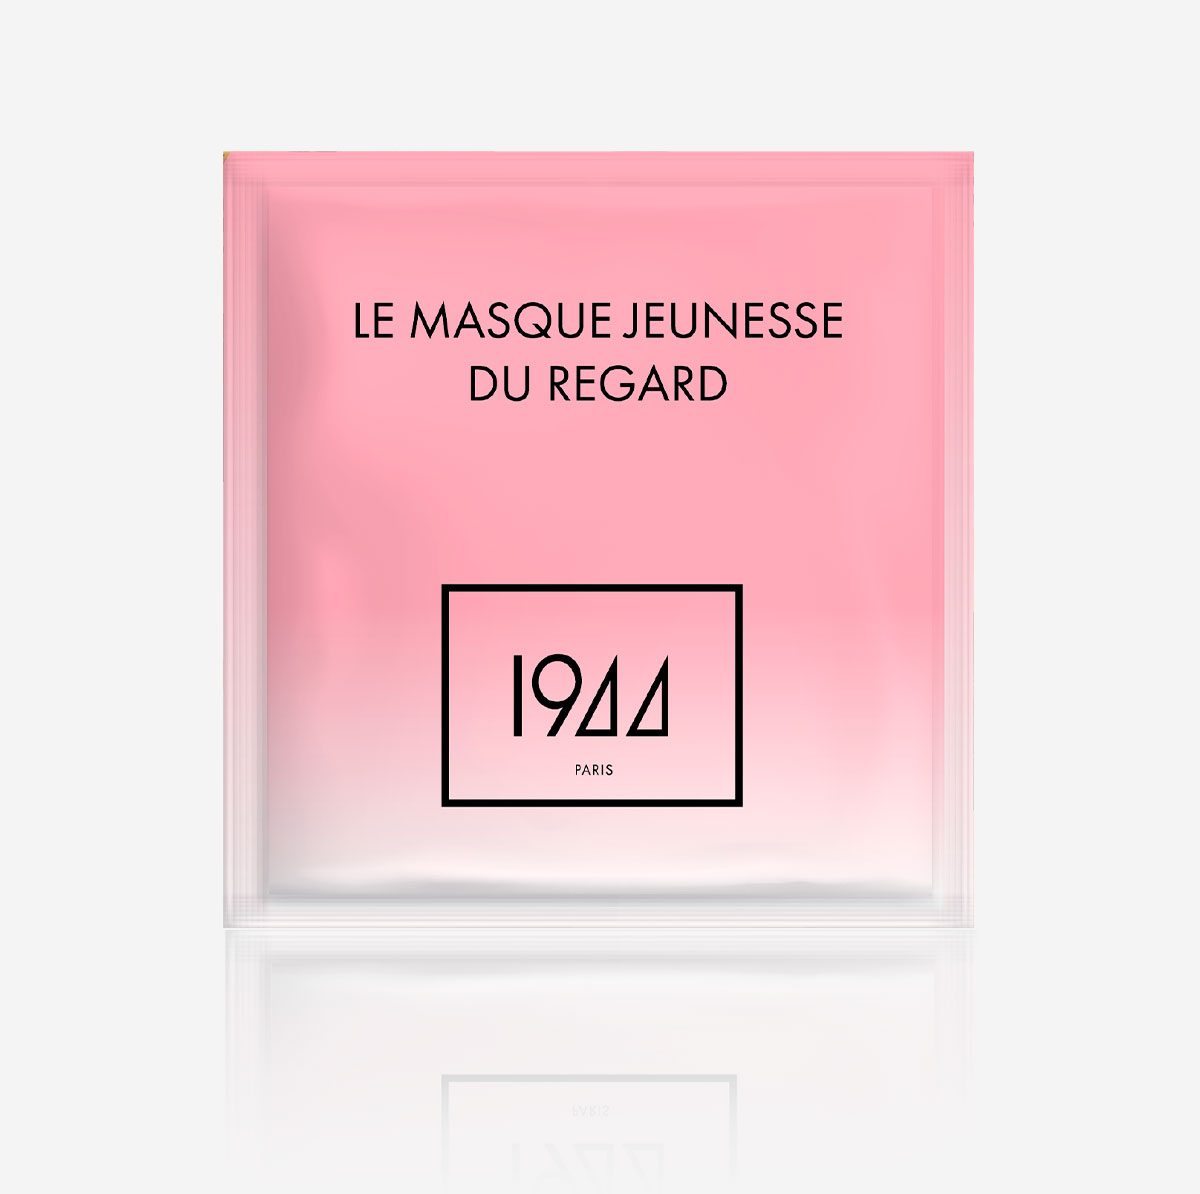 The mask "Jeunesse du regard" - 1944 Paris